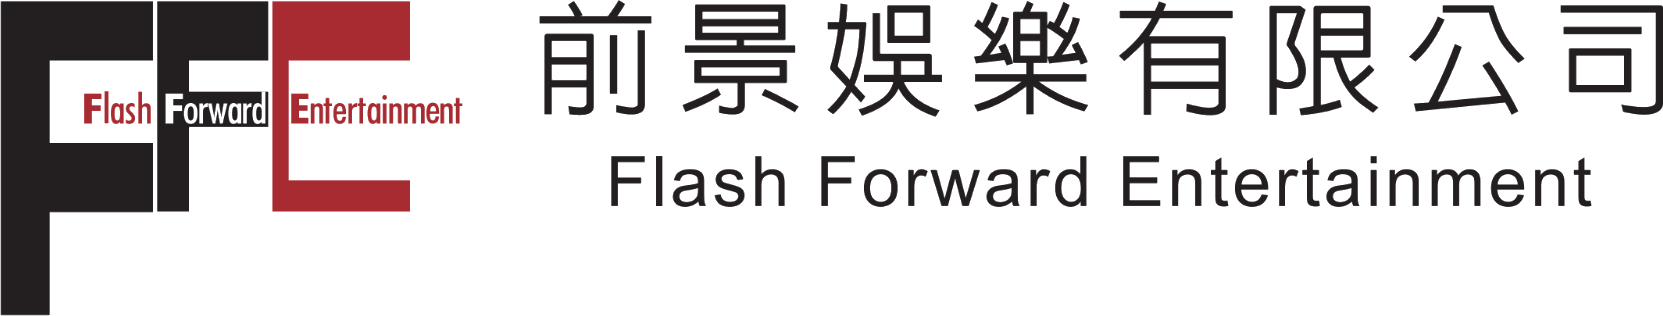 Flash Forward Entertainment Logo